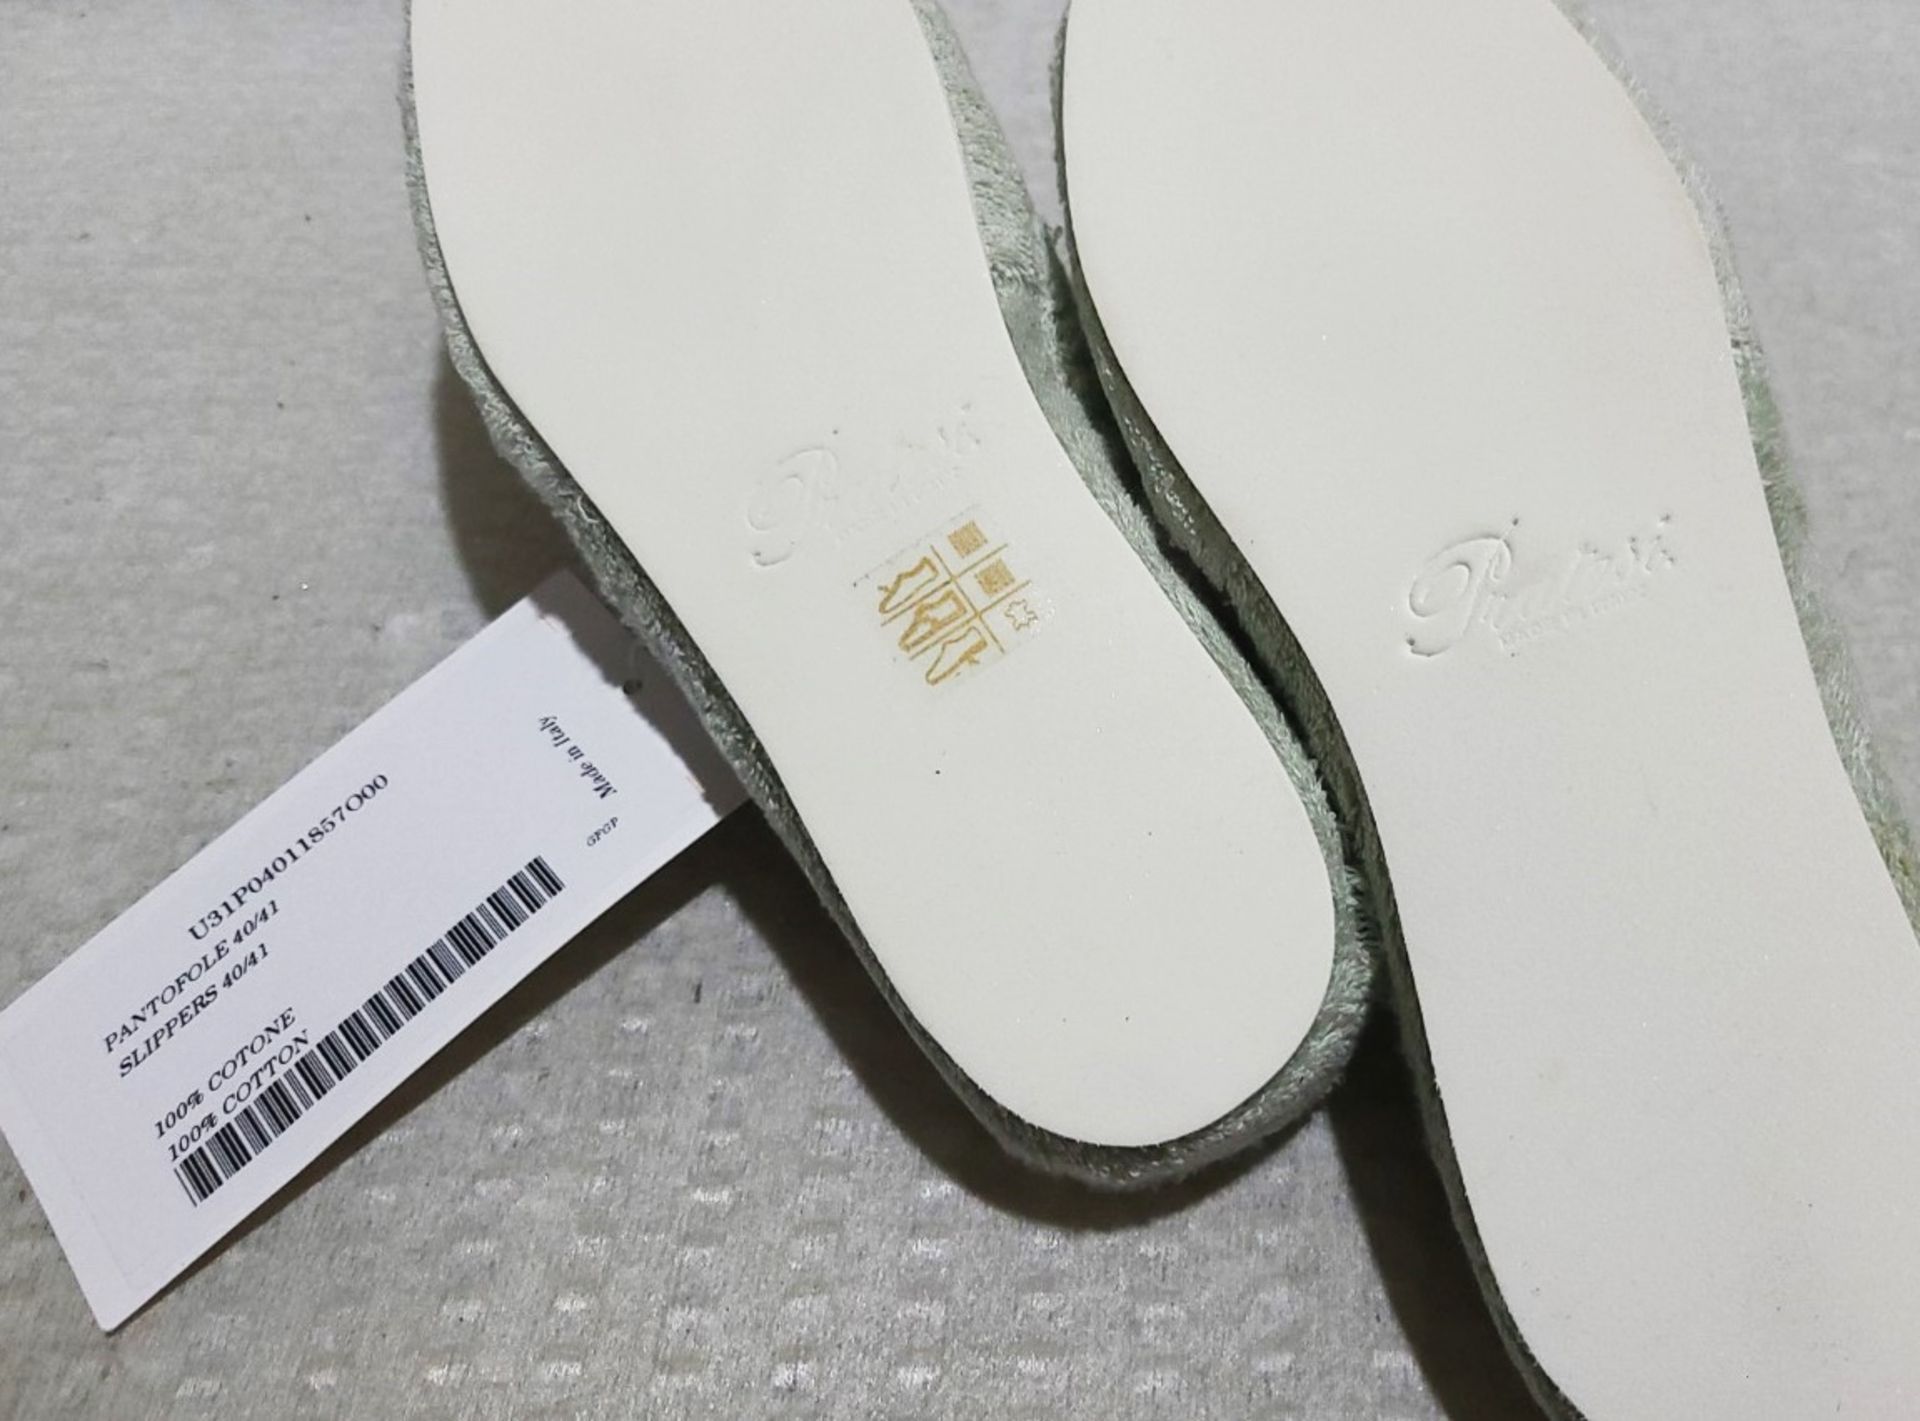 1 x PRATESI Panofole Lunar Grey Terry Cotton Slippers Size 40/41 - Original Price £200.00 - Image 5 of 6